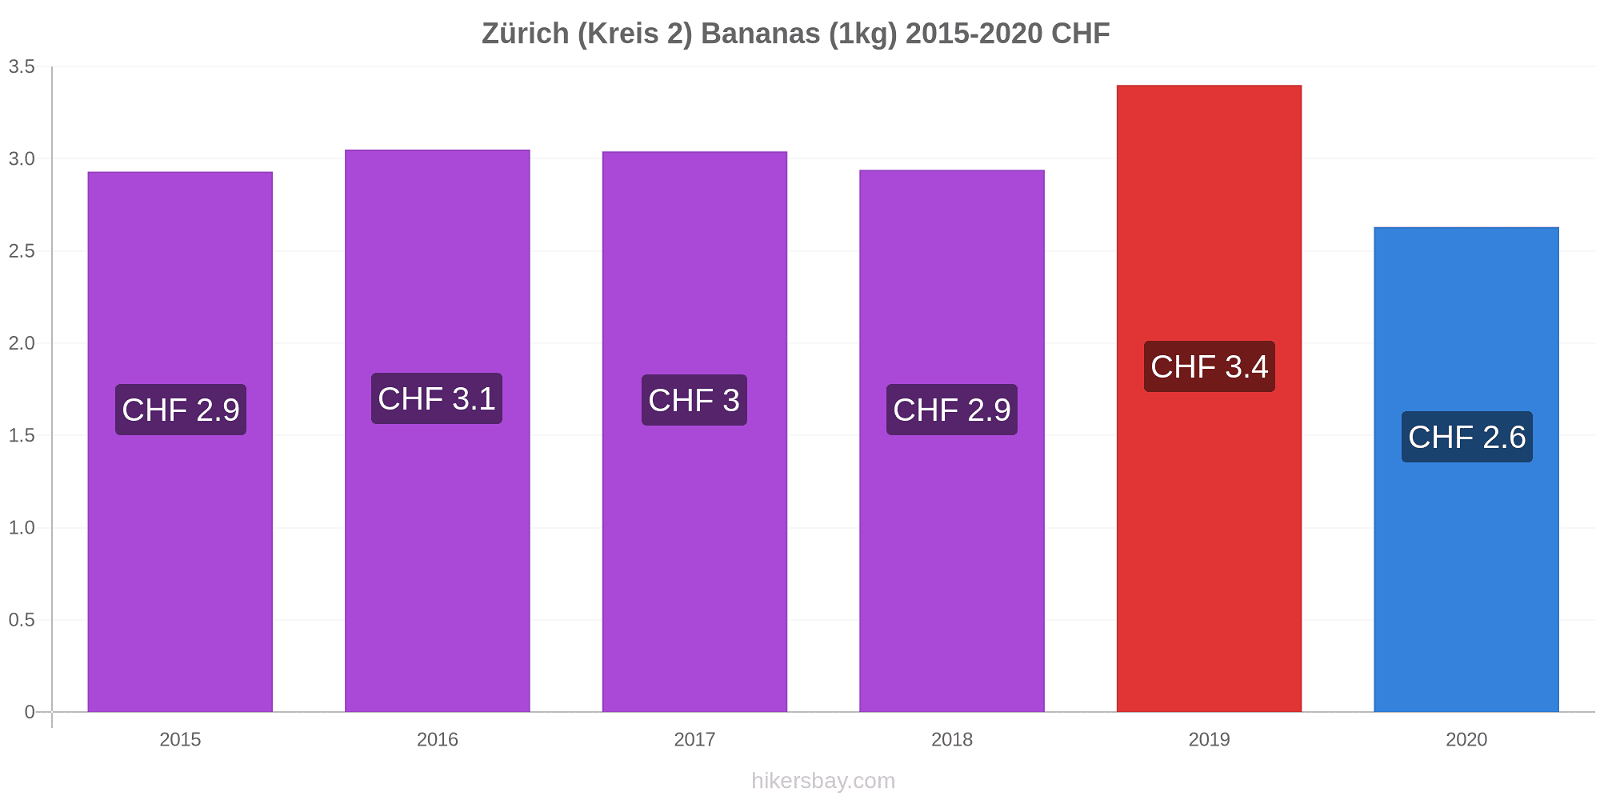 Zürich (Kreis 2) price changes Bananas (1kg) hikersbay.com